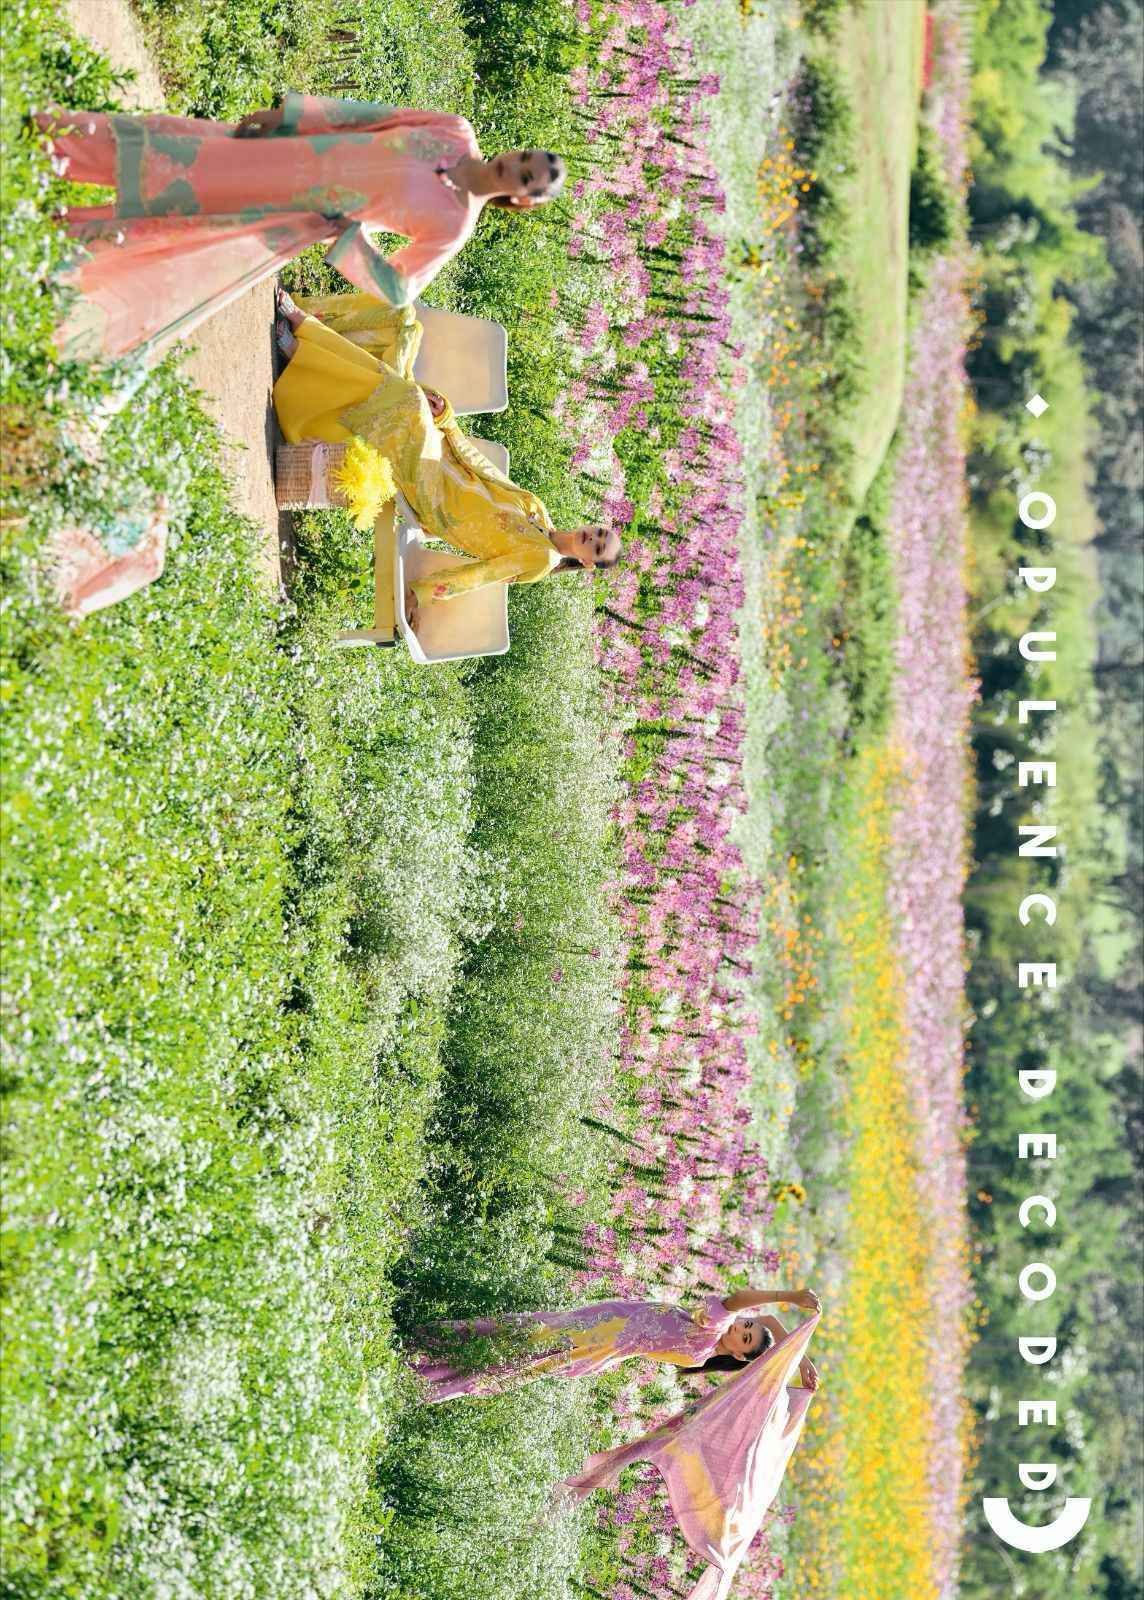 Varsha The Secret Garden Salwar Kameez ( 4 pcs Catalog )